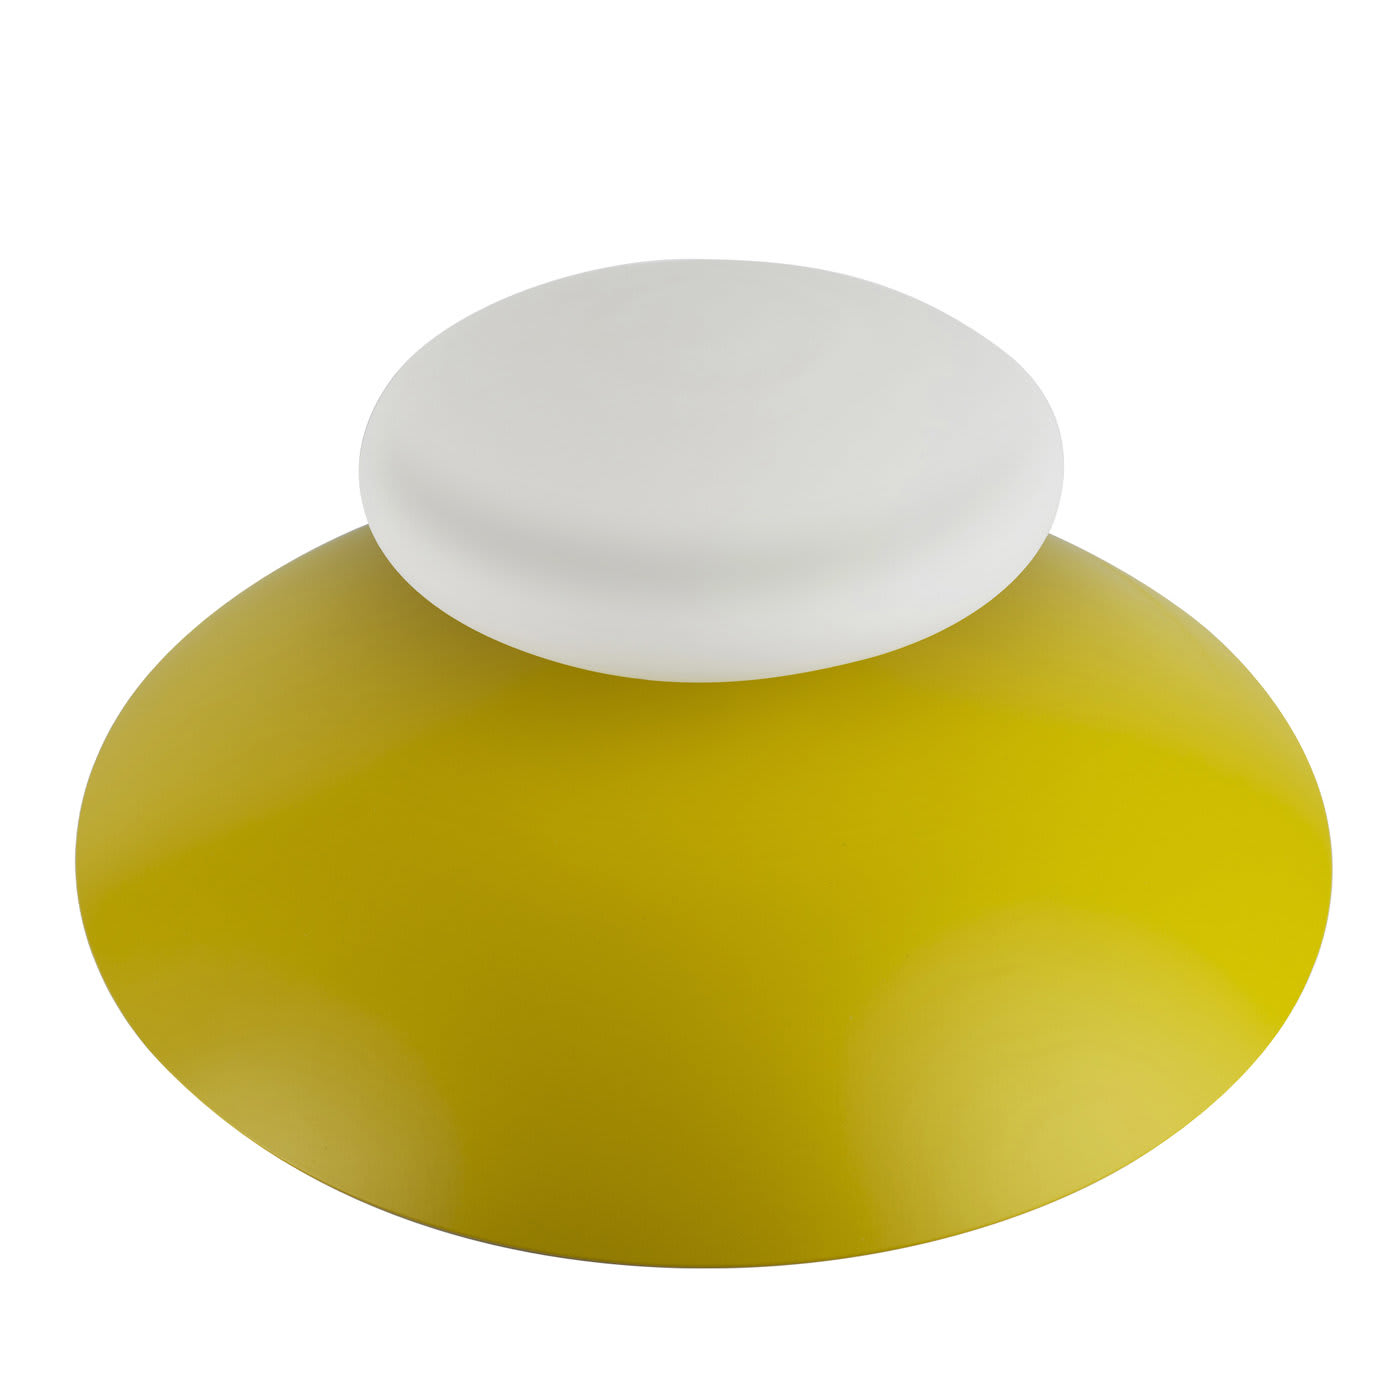 Cymbal Table Lamp by Alalda_design - Interia